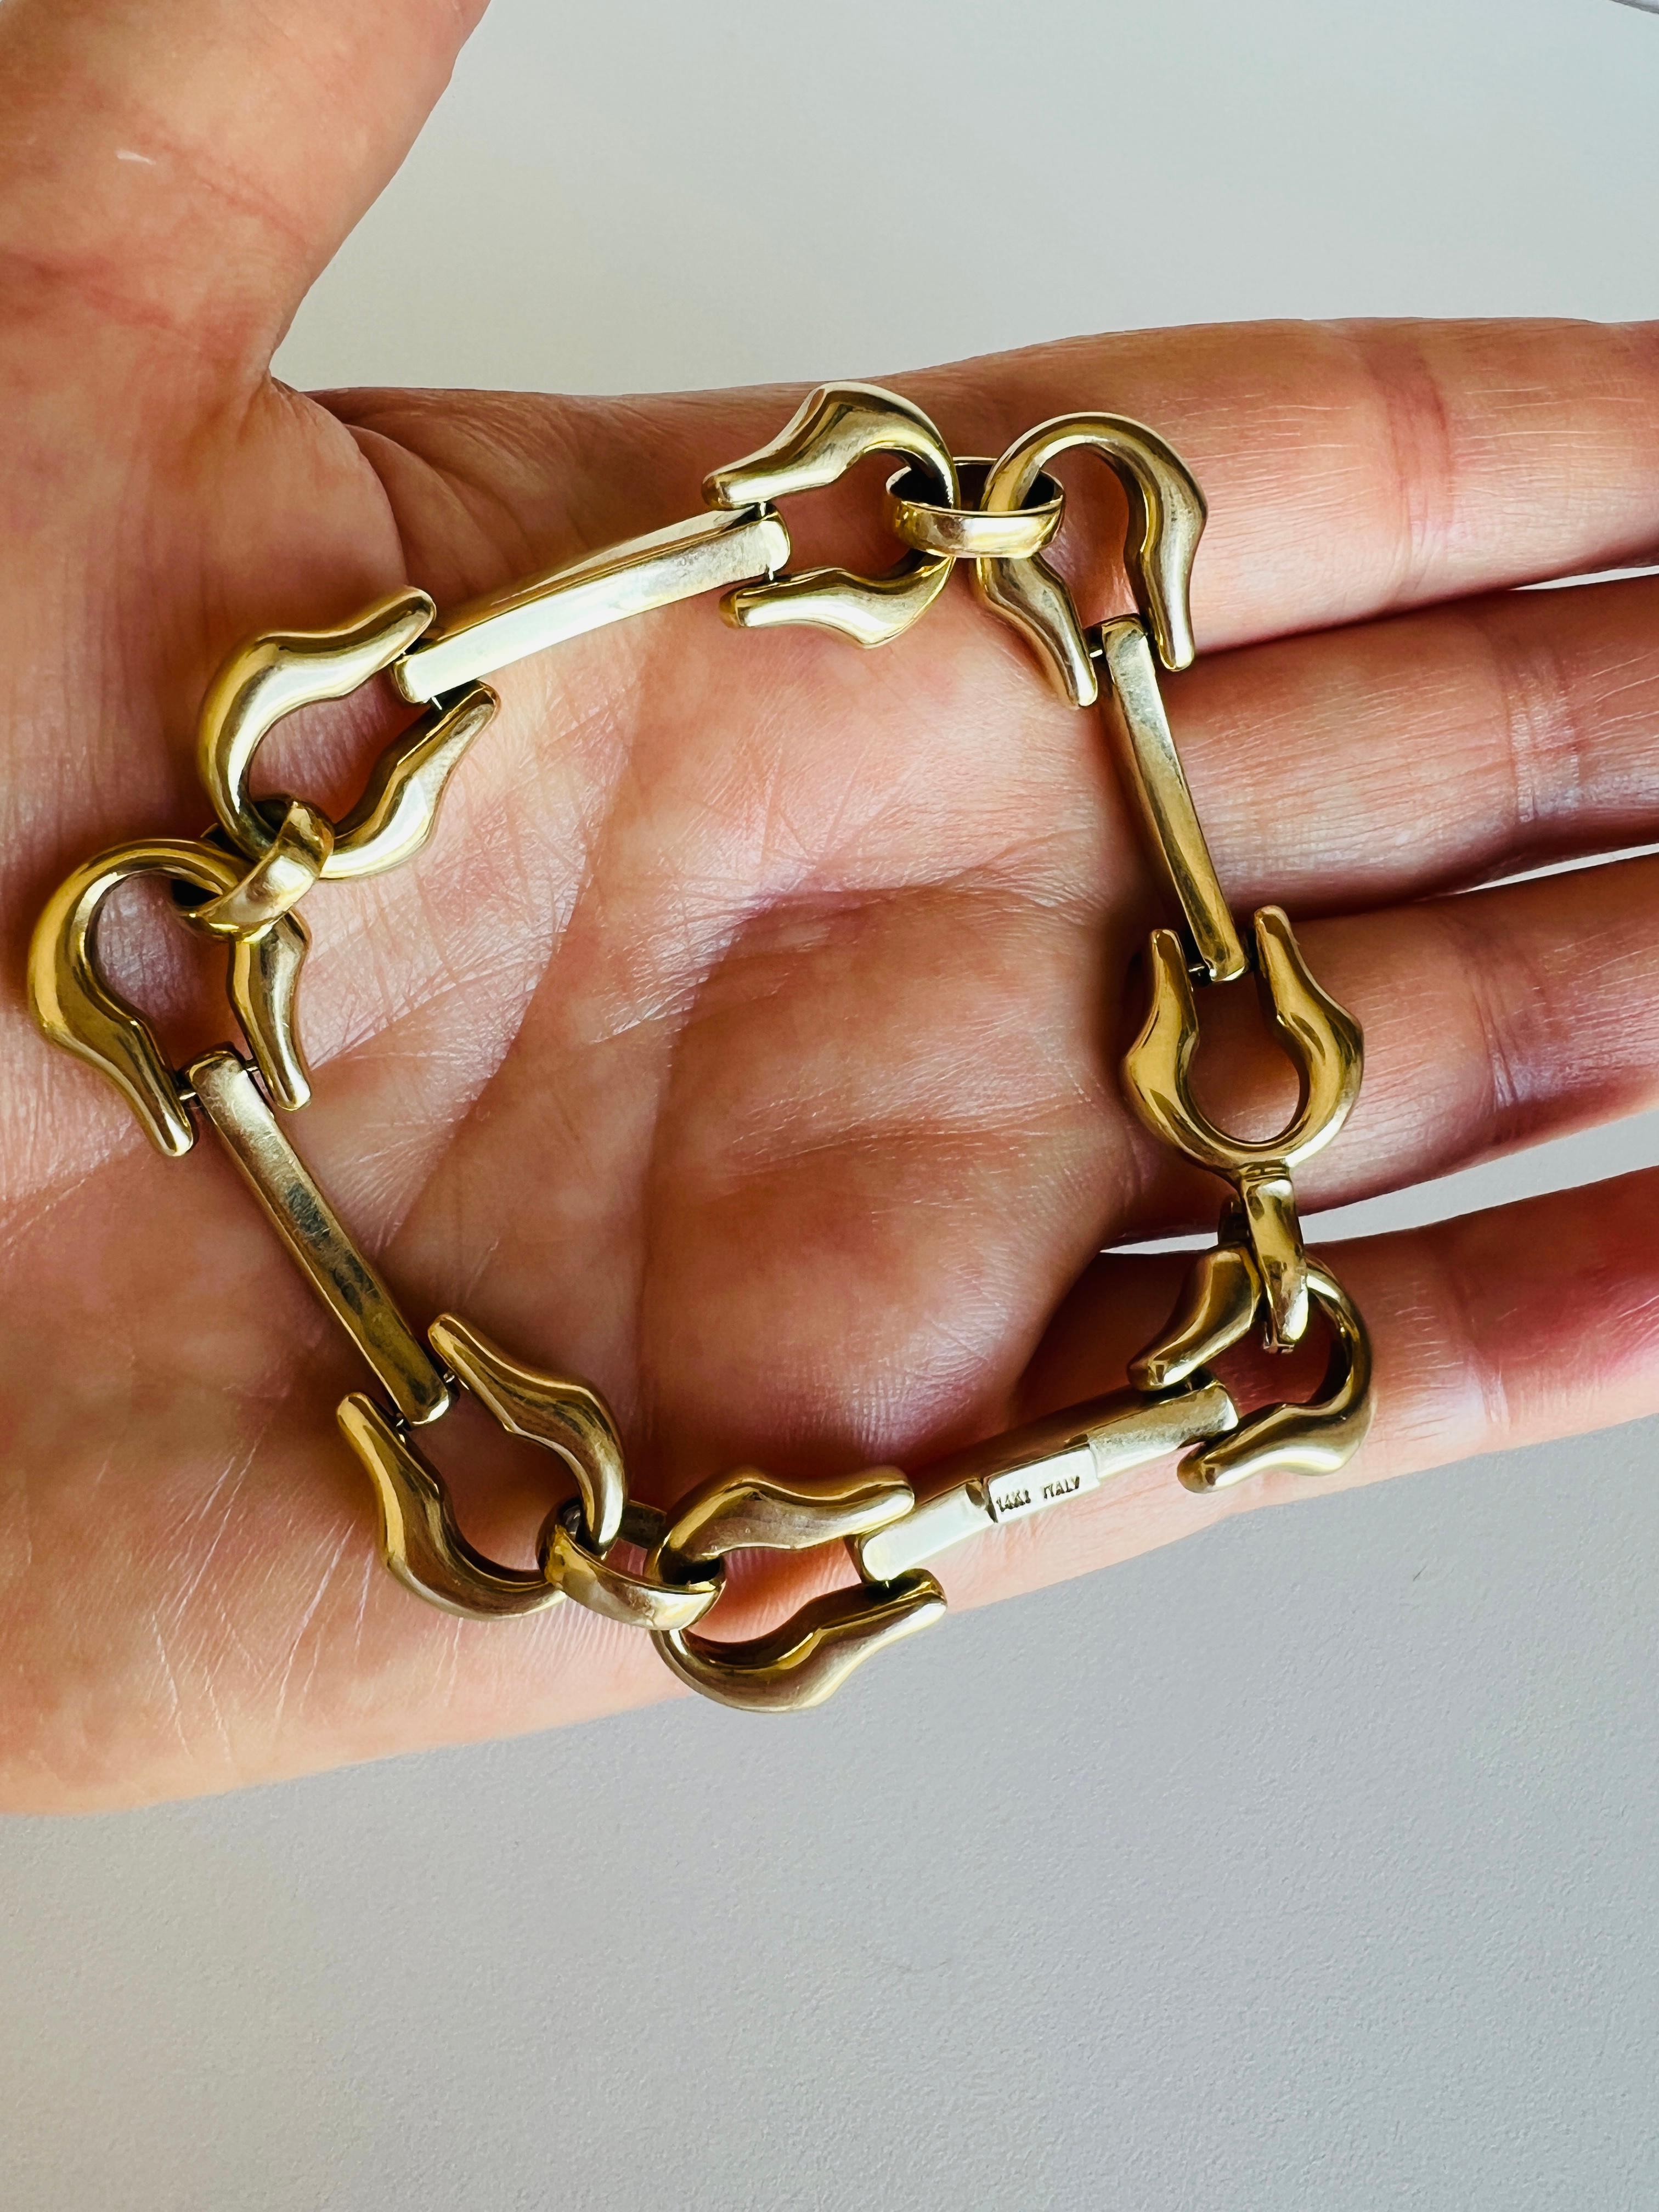 1940s 14k Italian Yellow & White Gold Retro Bracelet Horse Bit Cable Chain Link 1